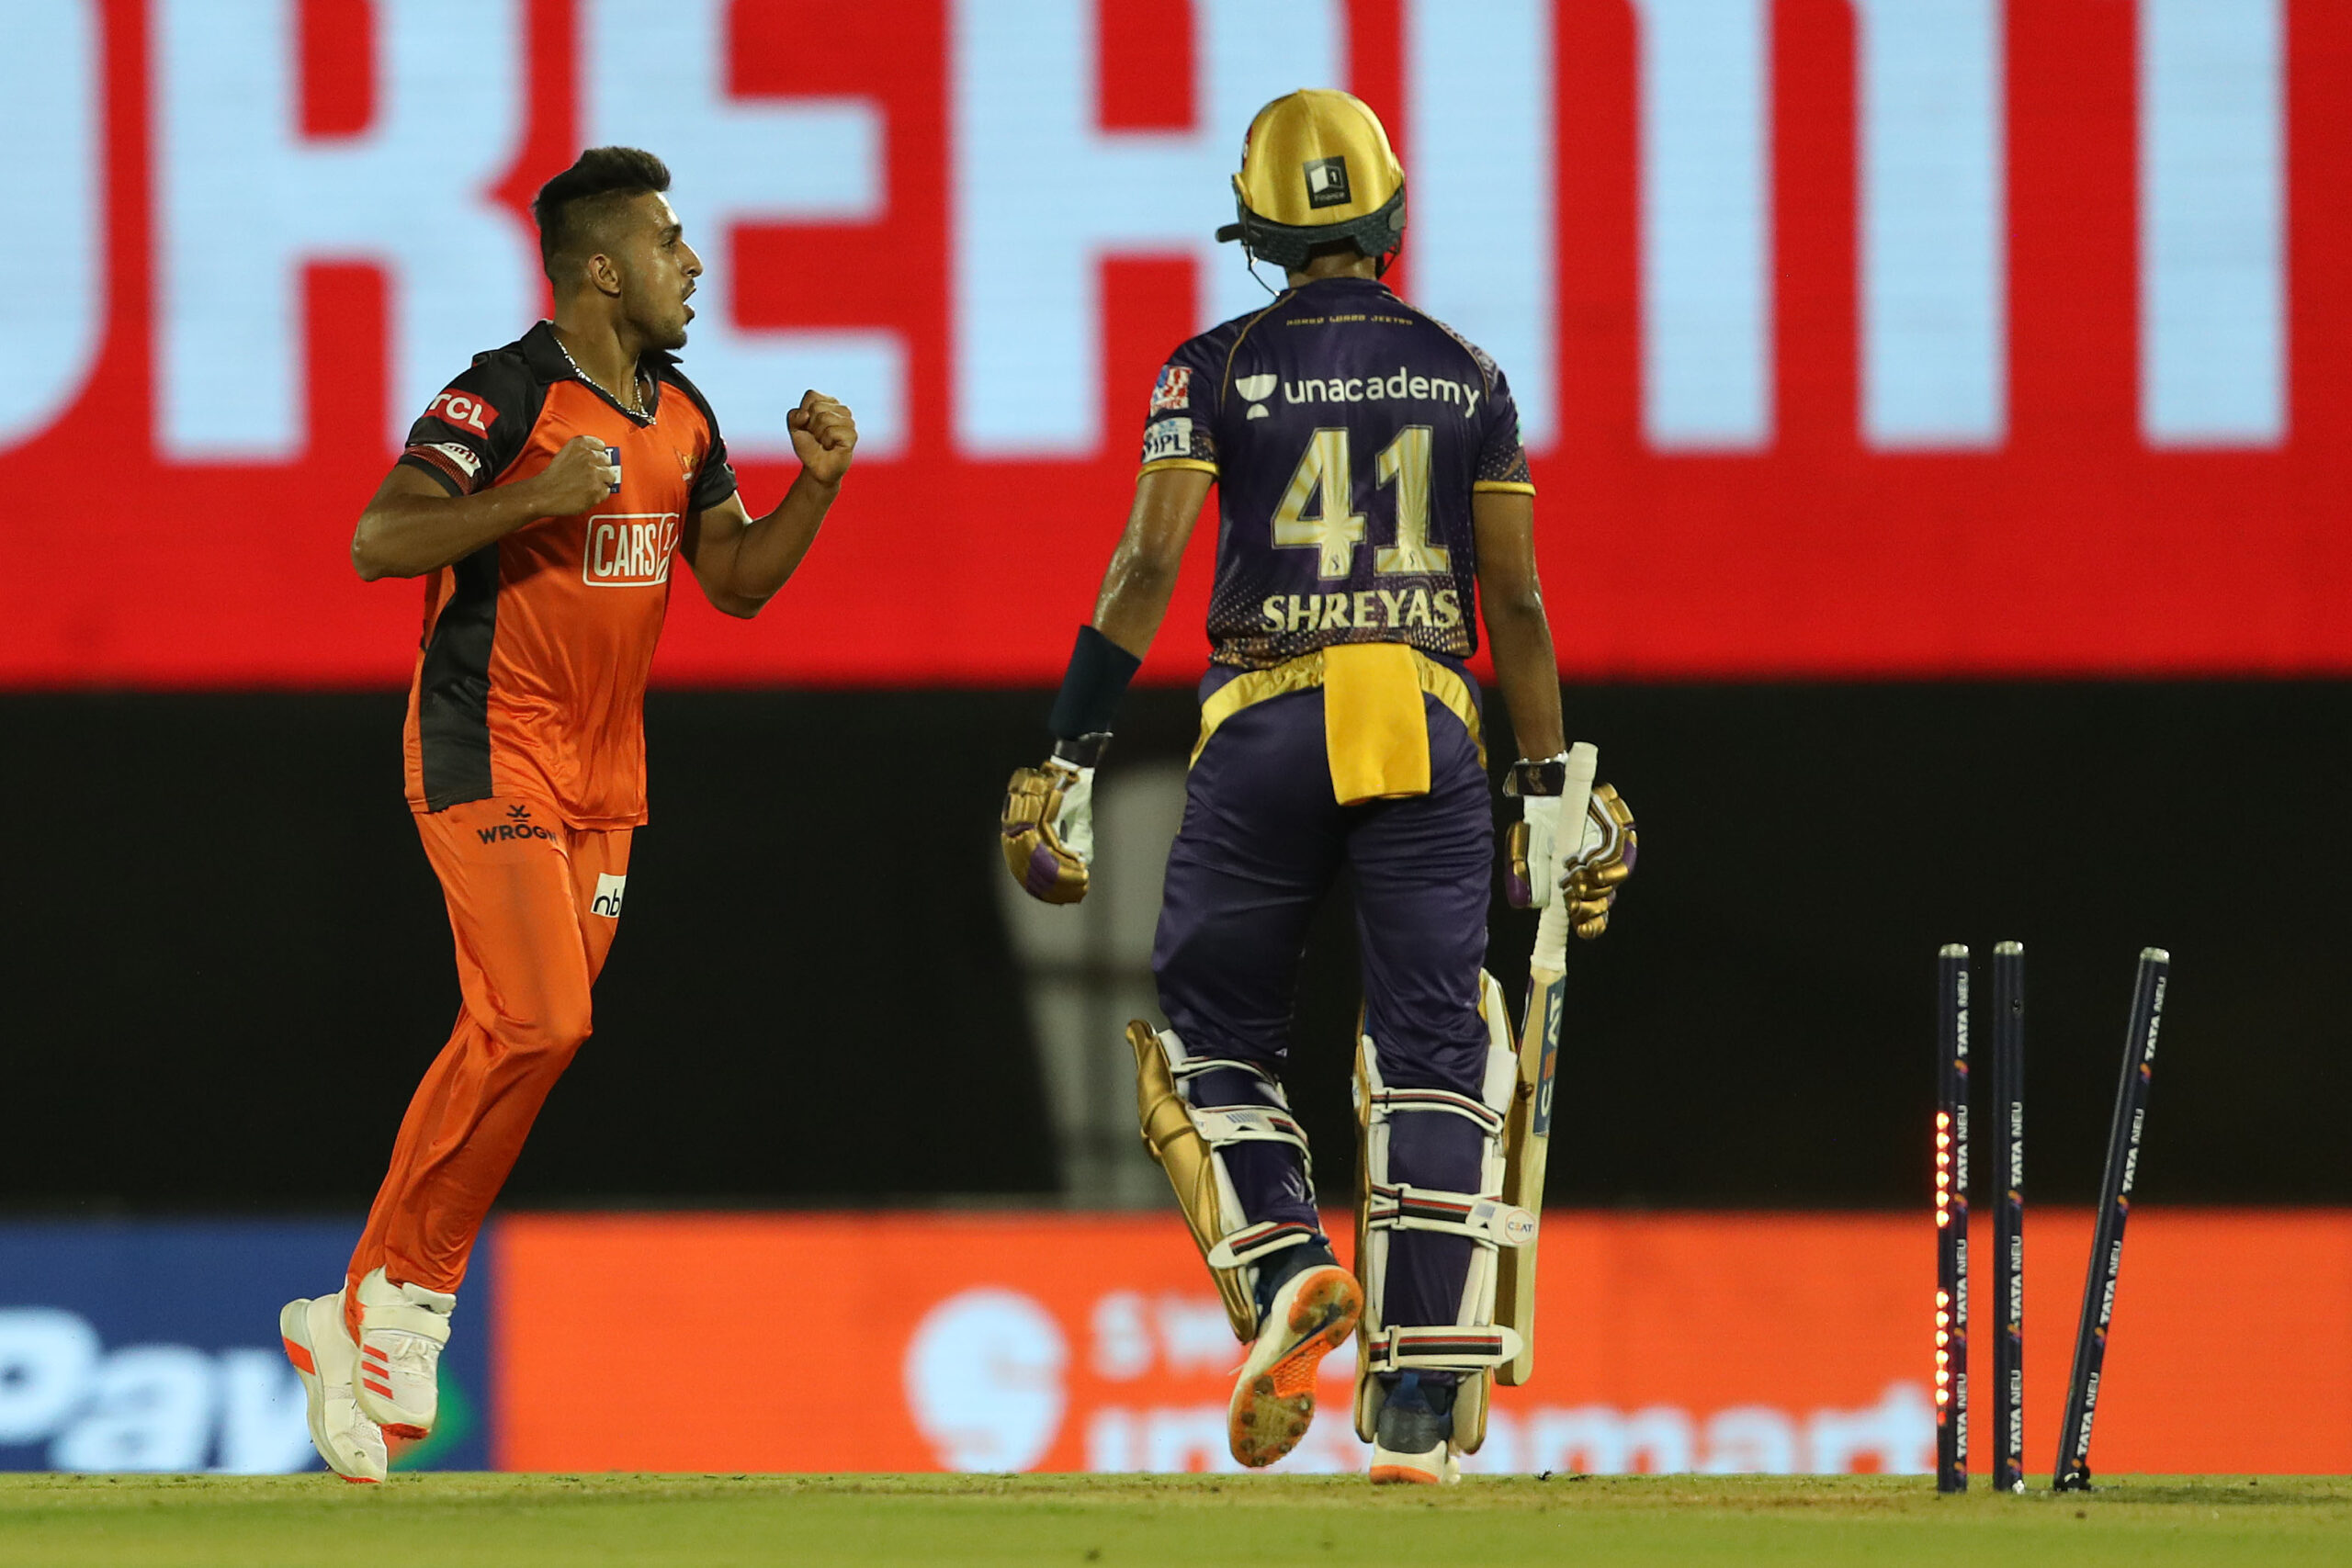 Sunrisers Hyderabad defeated Kolkata Knight Riders by 7 wickets